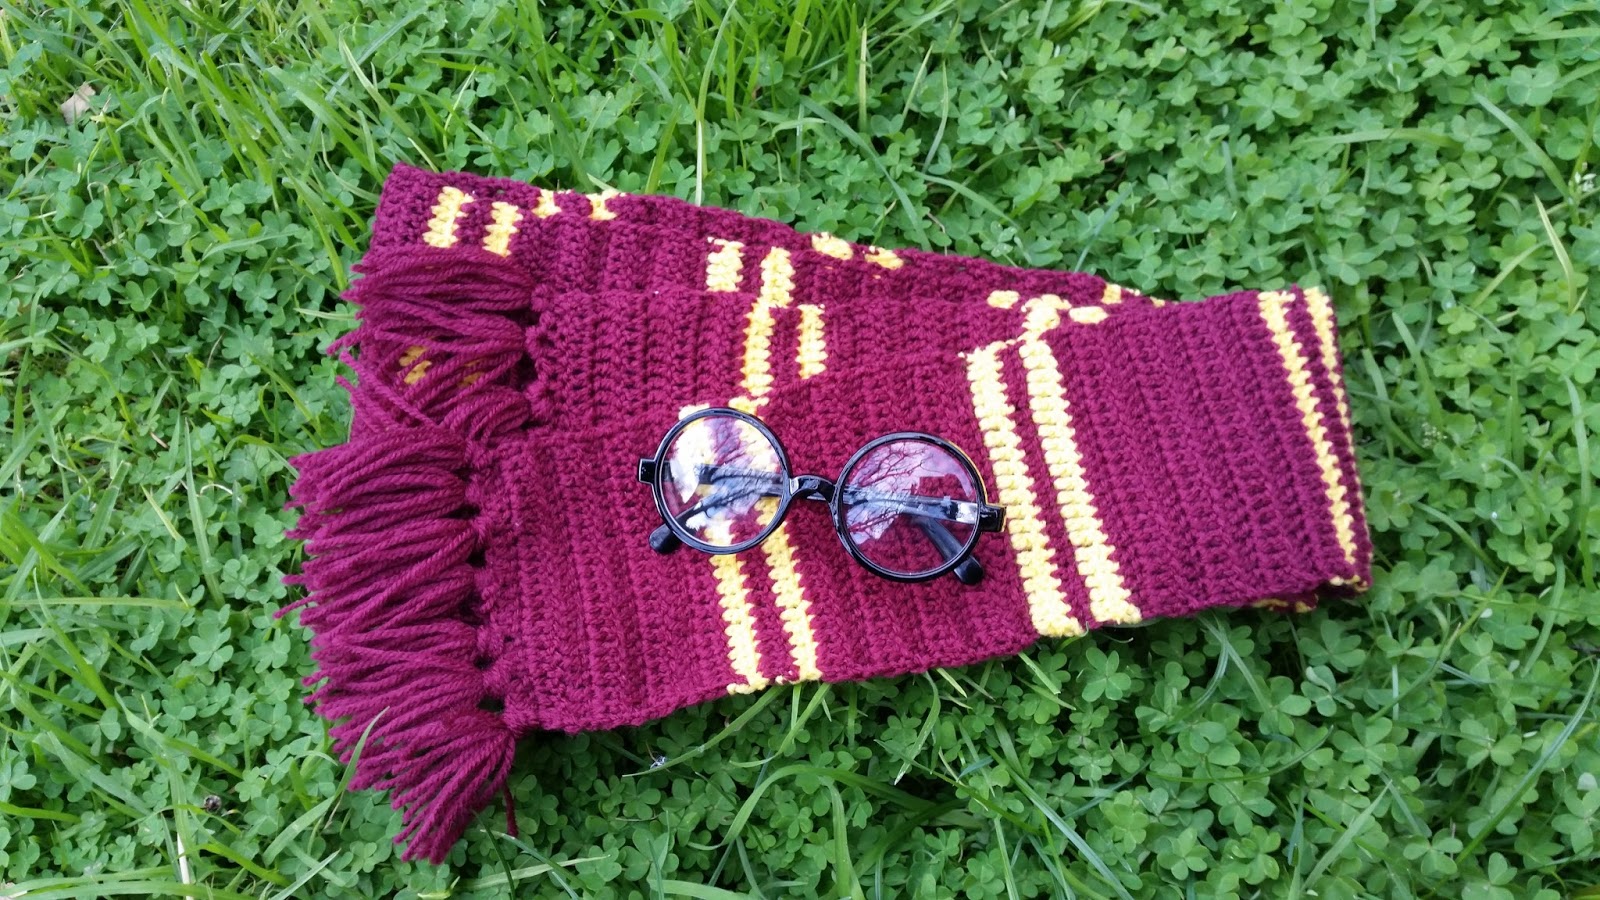 Crochet Harry Potter Hogwarts House Scarf Bookmark - kNot mY deSigns